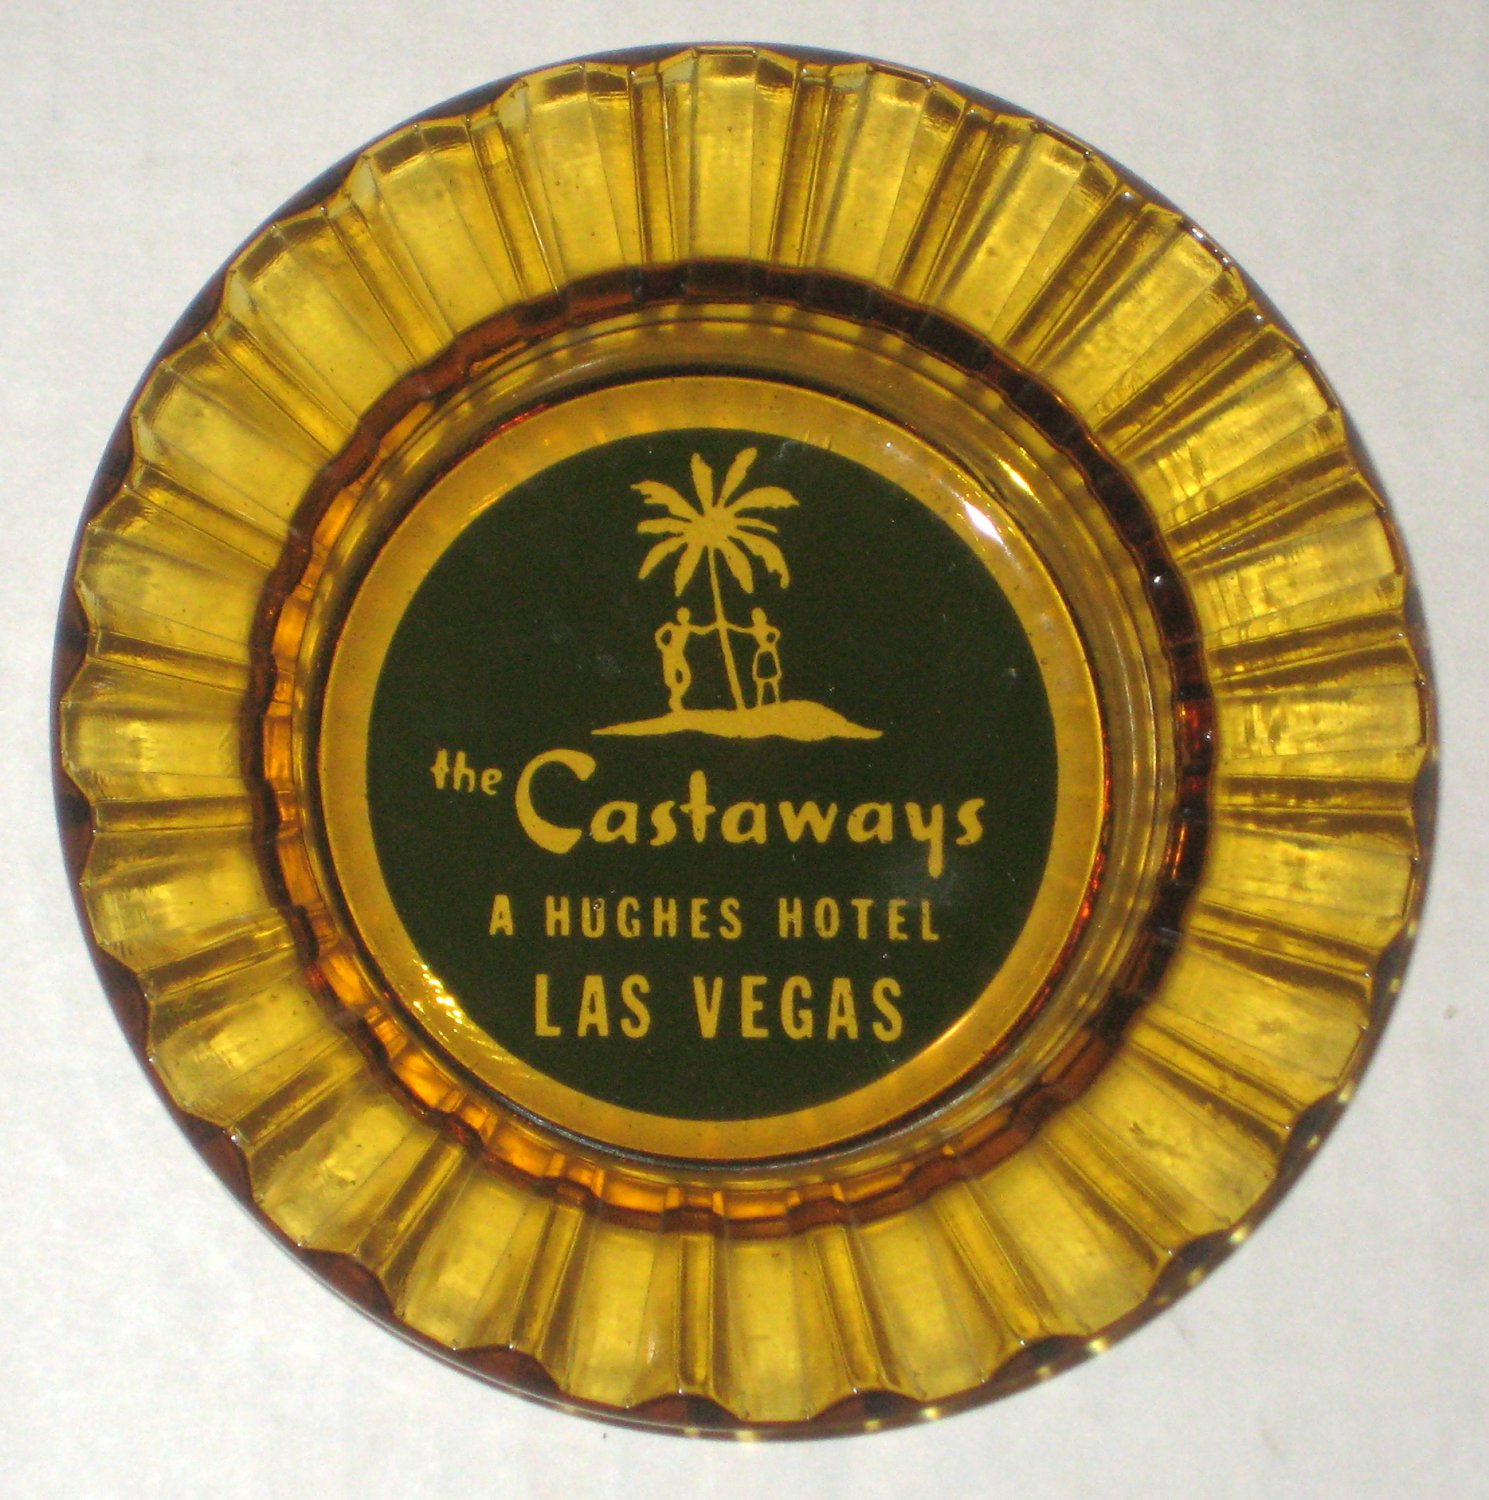 The Castaways Howard Hughes Hotel Glass Ashtray Ash Tray 4Â½" Scalloped Smoke Color Las Vegas